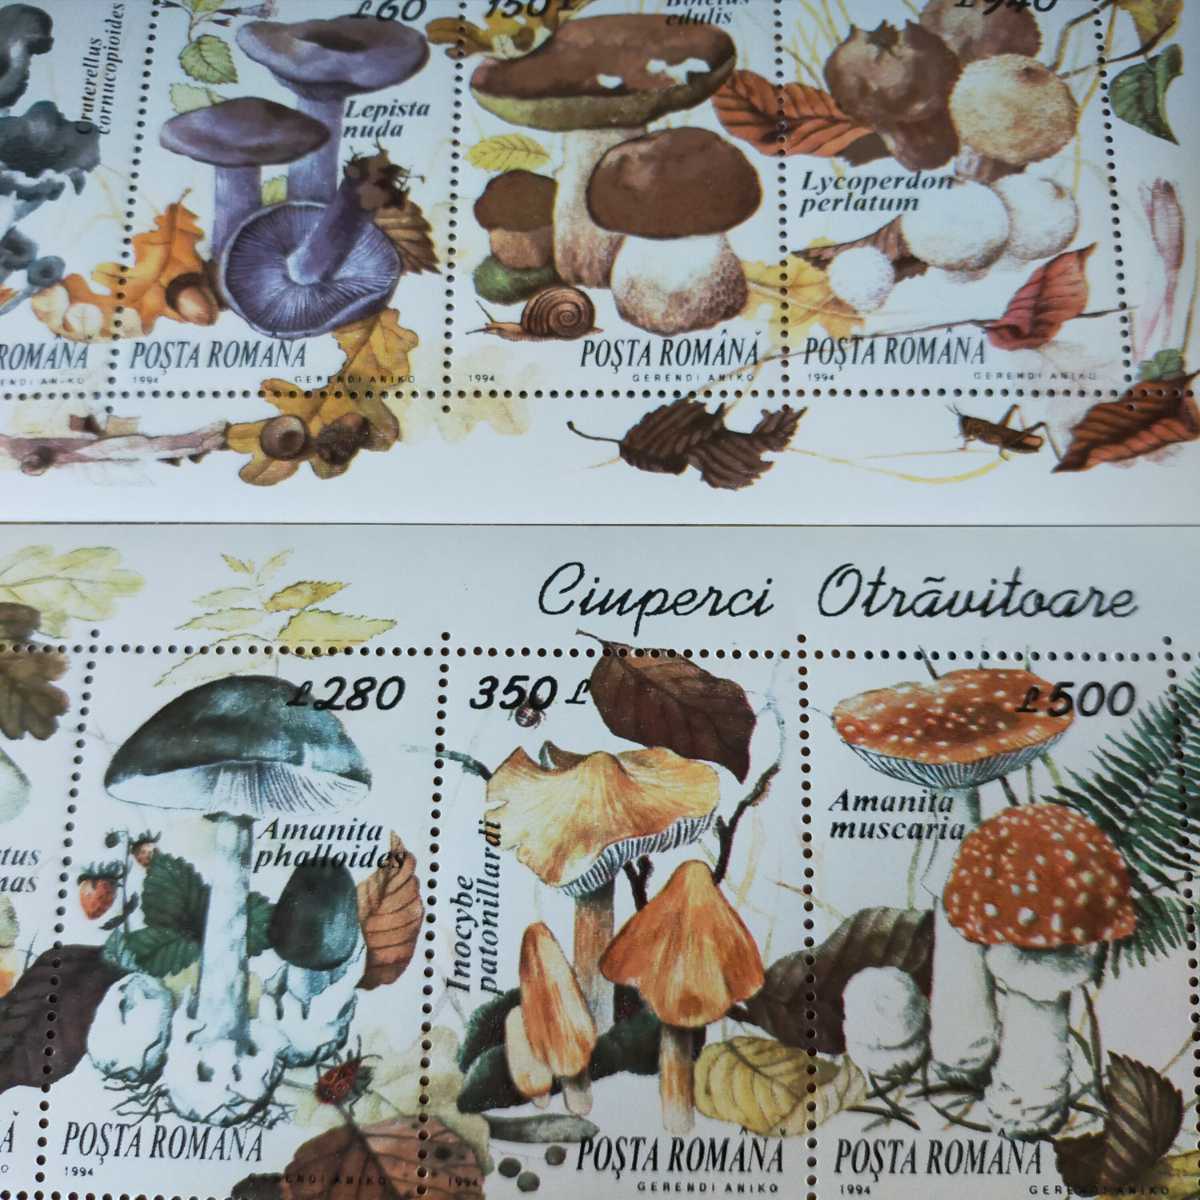  rare 1994 year Roo mania mushrooms mushroom stamp seat set 